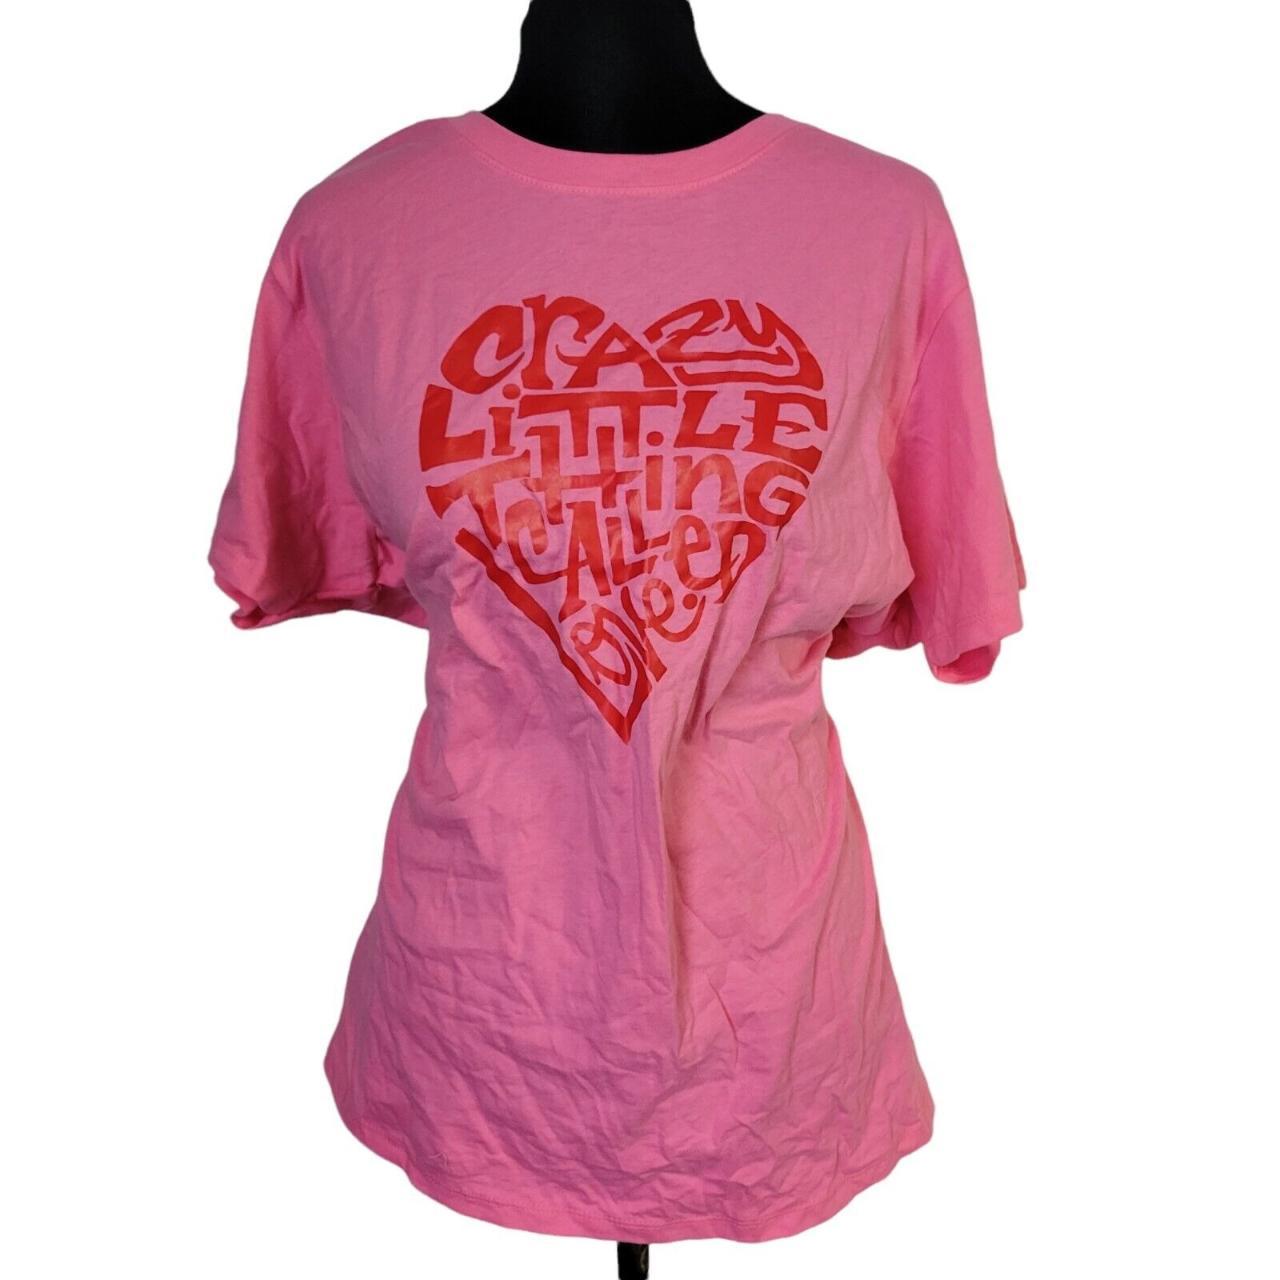 Product Image 2 - Women's LA POP ART Tshirt.